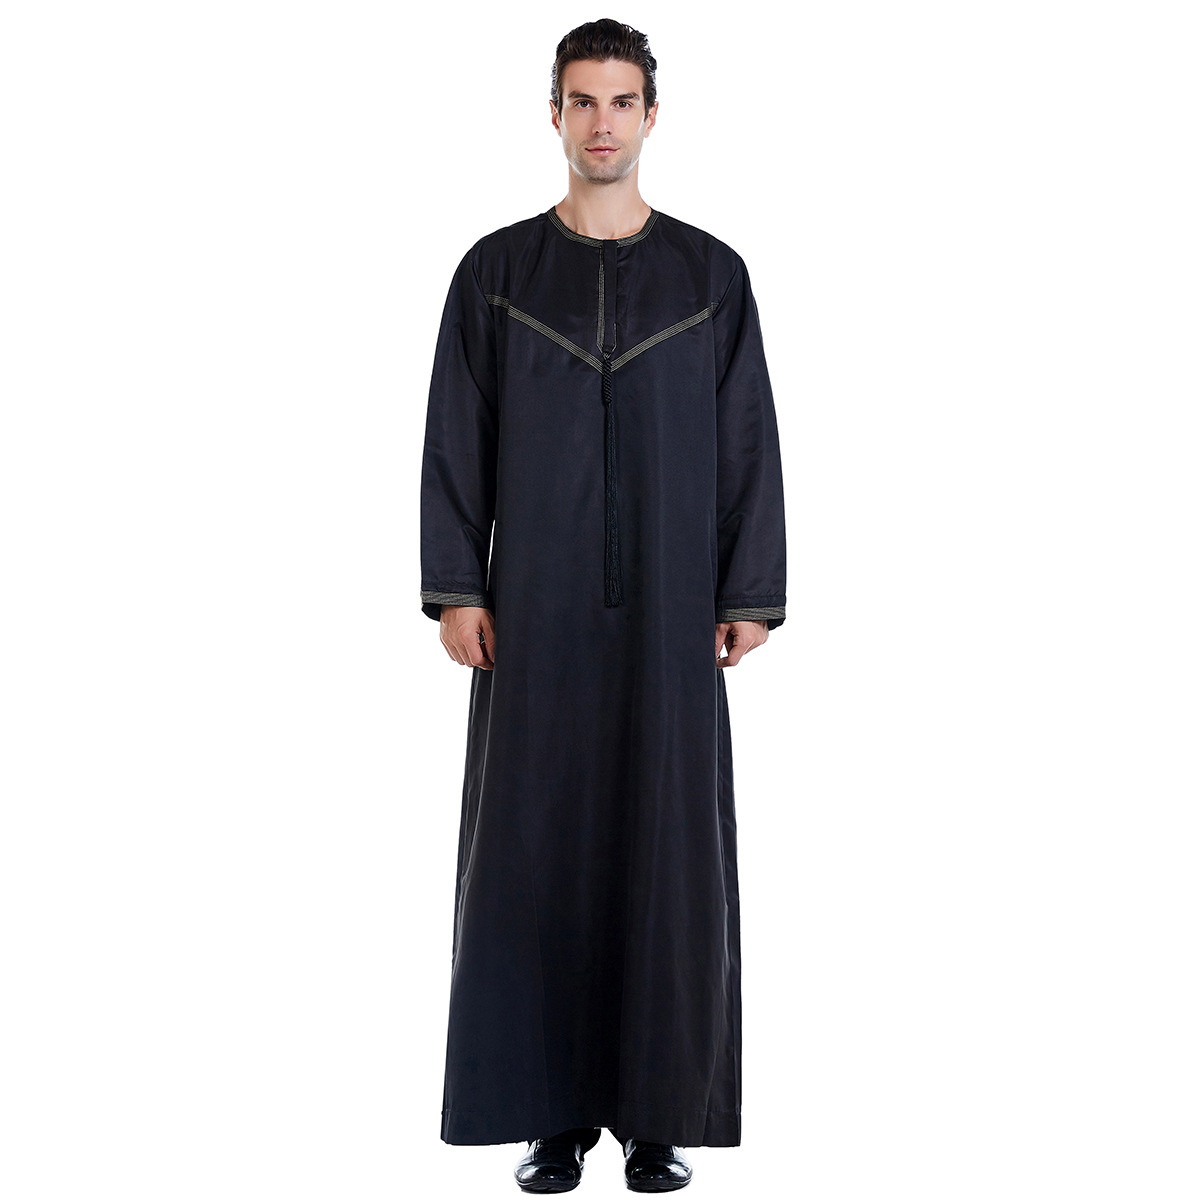 Arabic Men Dress